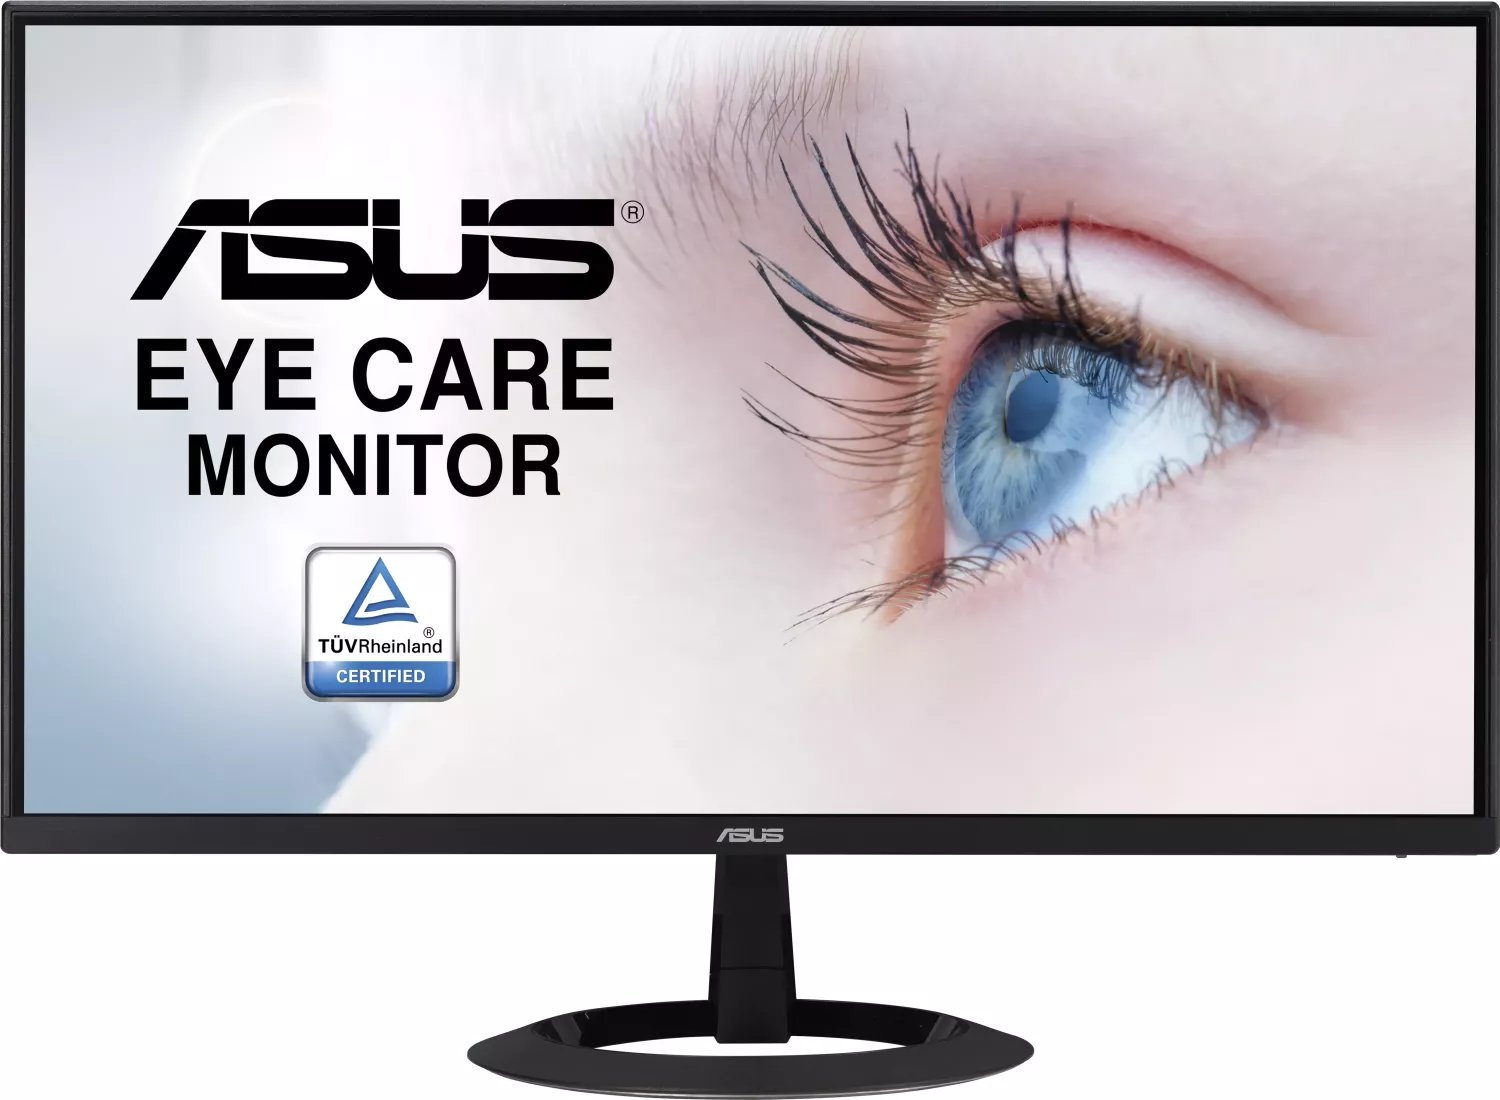 ASUS VZ22EHE Eye Care Monitor 21.5inch monitors